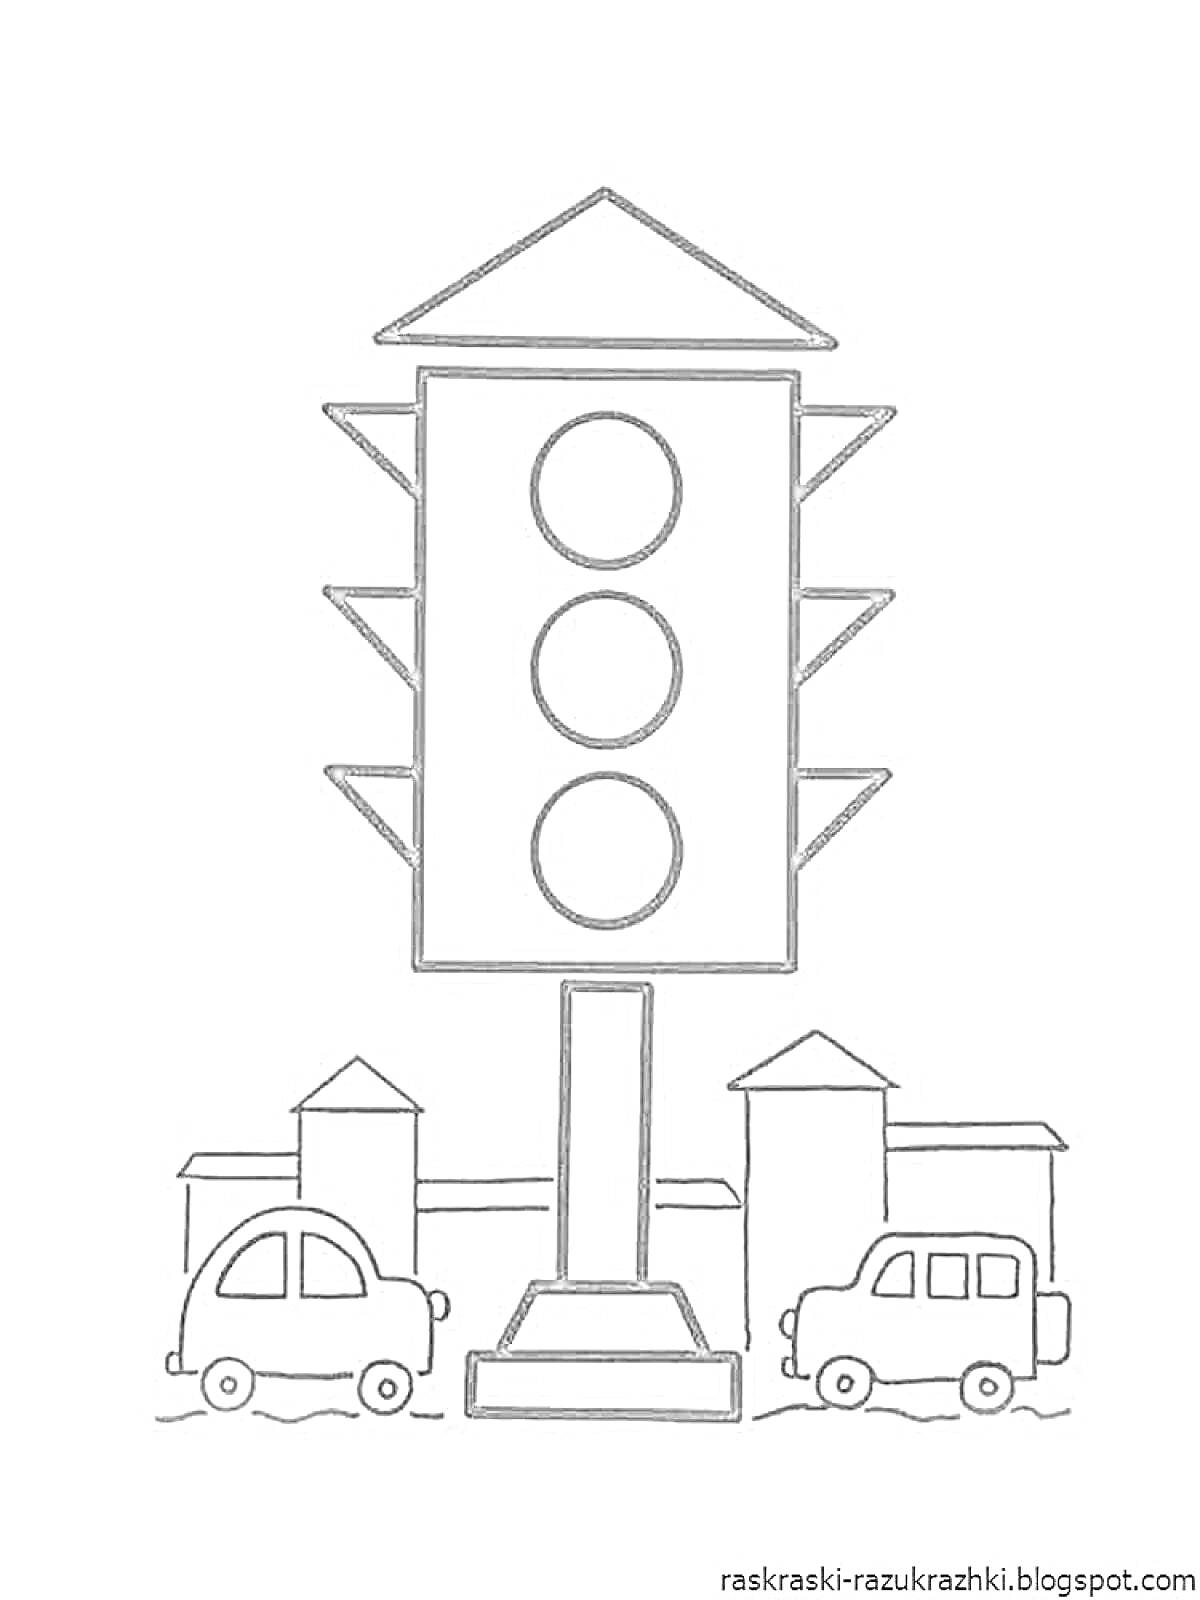 Раскраска Светофор с автомобилями и домами